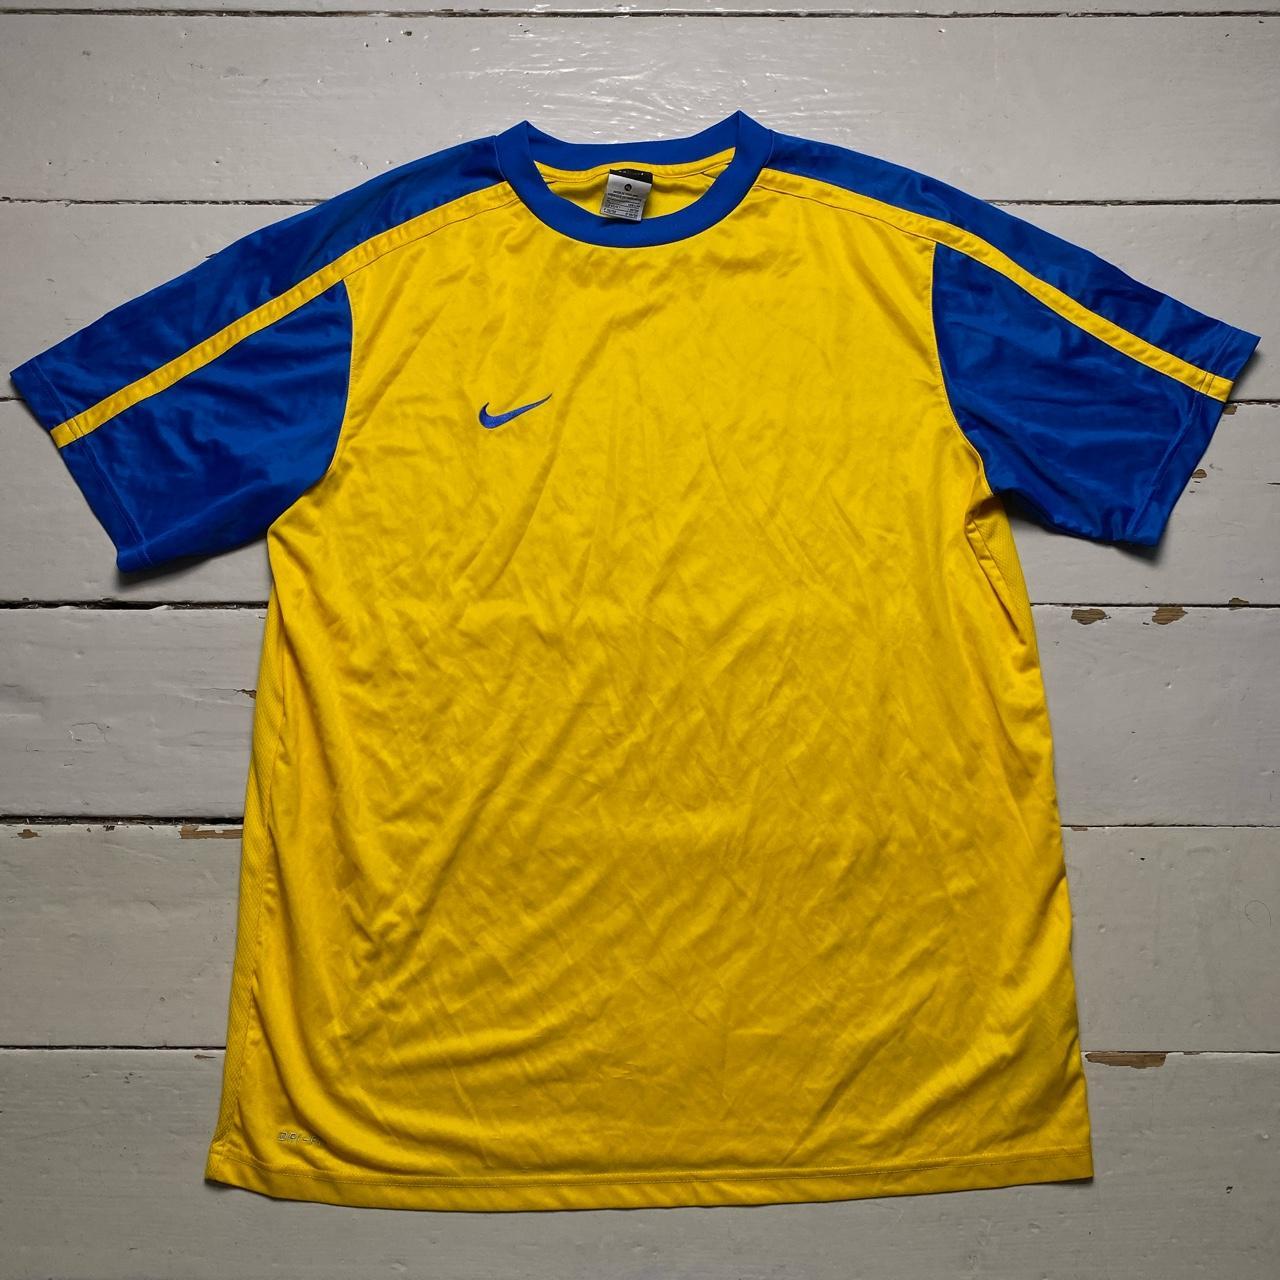 Nike Yellow and Blue Dri Fit Football Jersey T Shirt